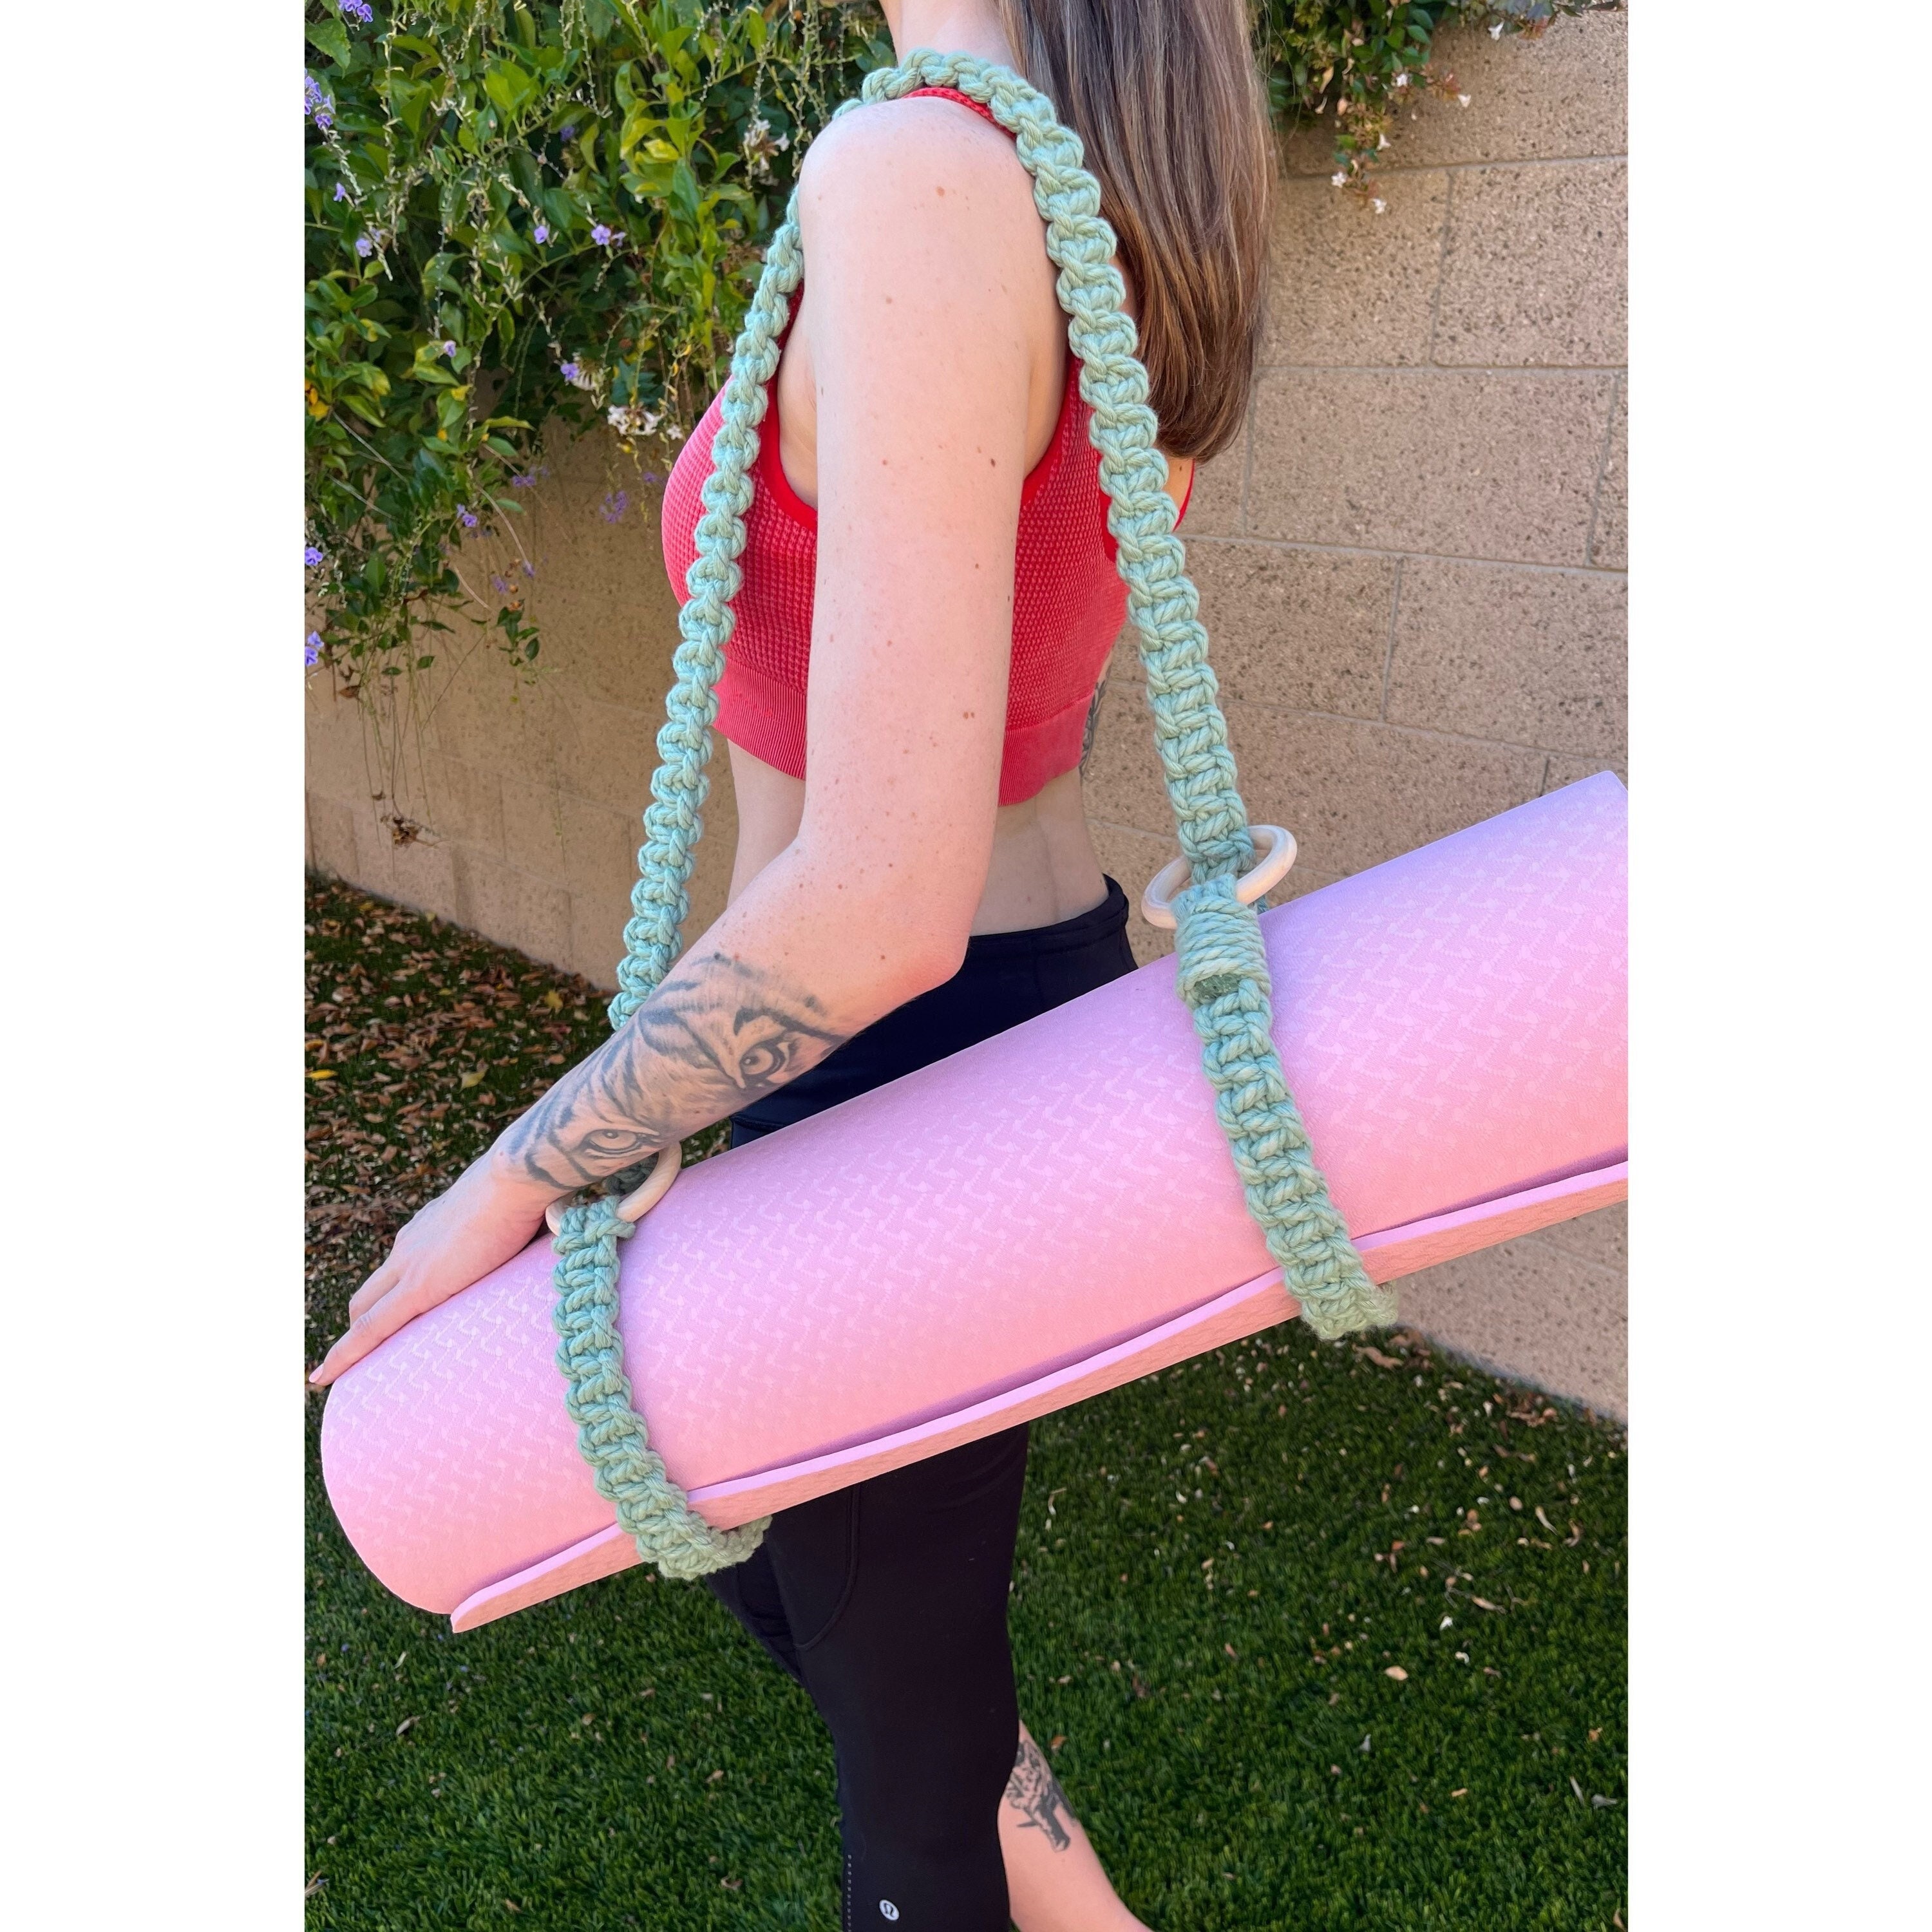 Macrame Boho Yoga Mat Carrying Strap, Flat, 100% Cotton at Rs 545.00, Carrying Straps